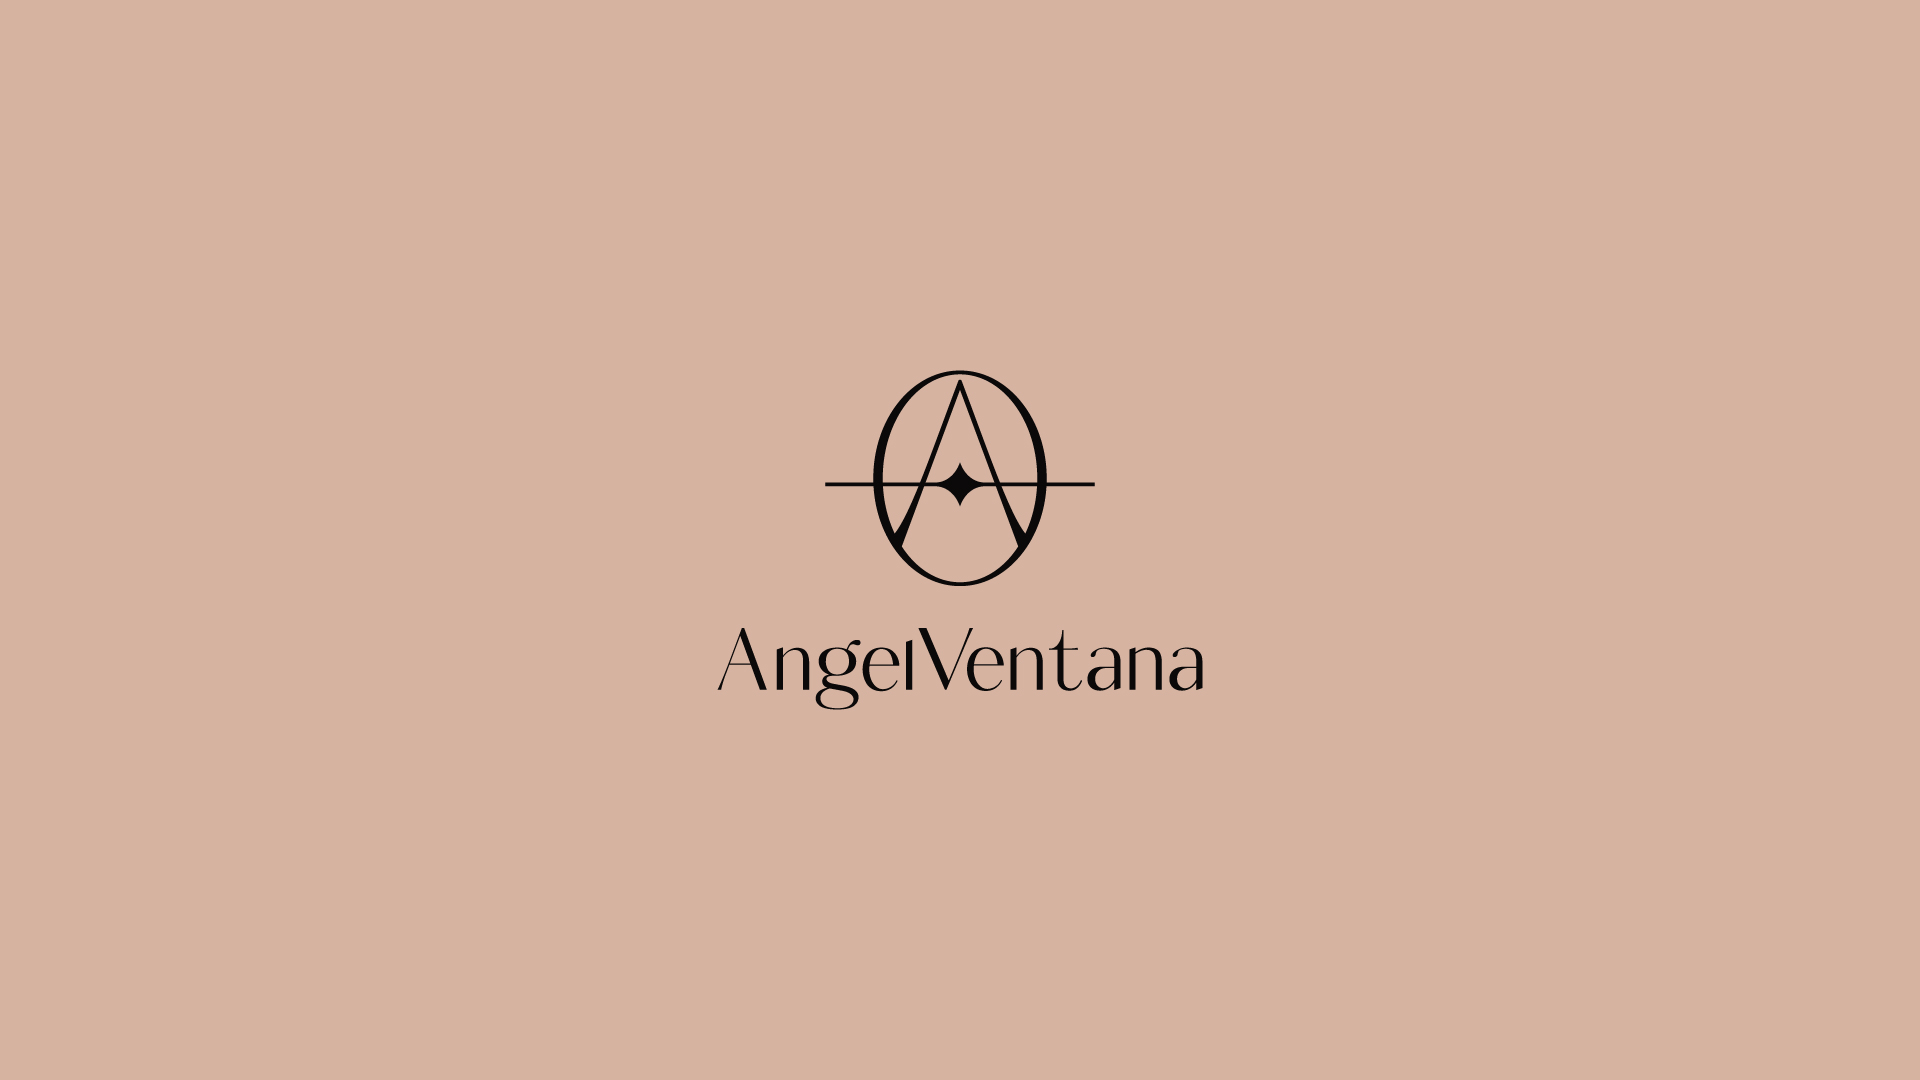 Angelventana品牌形象设计提案-07.jpg